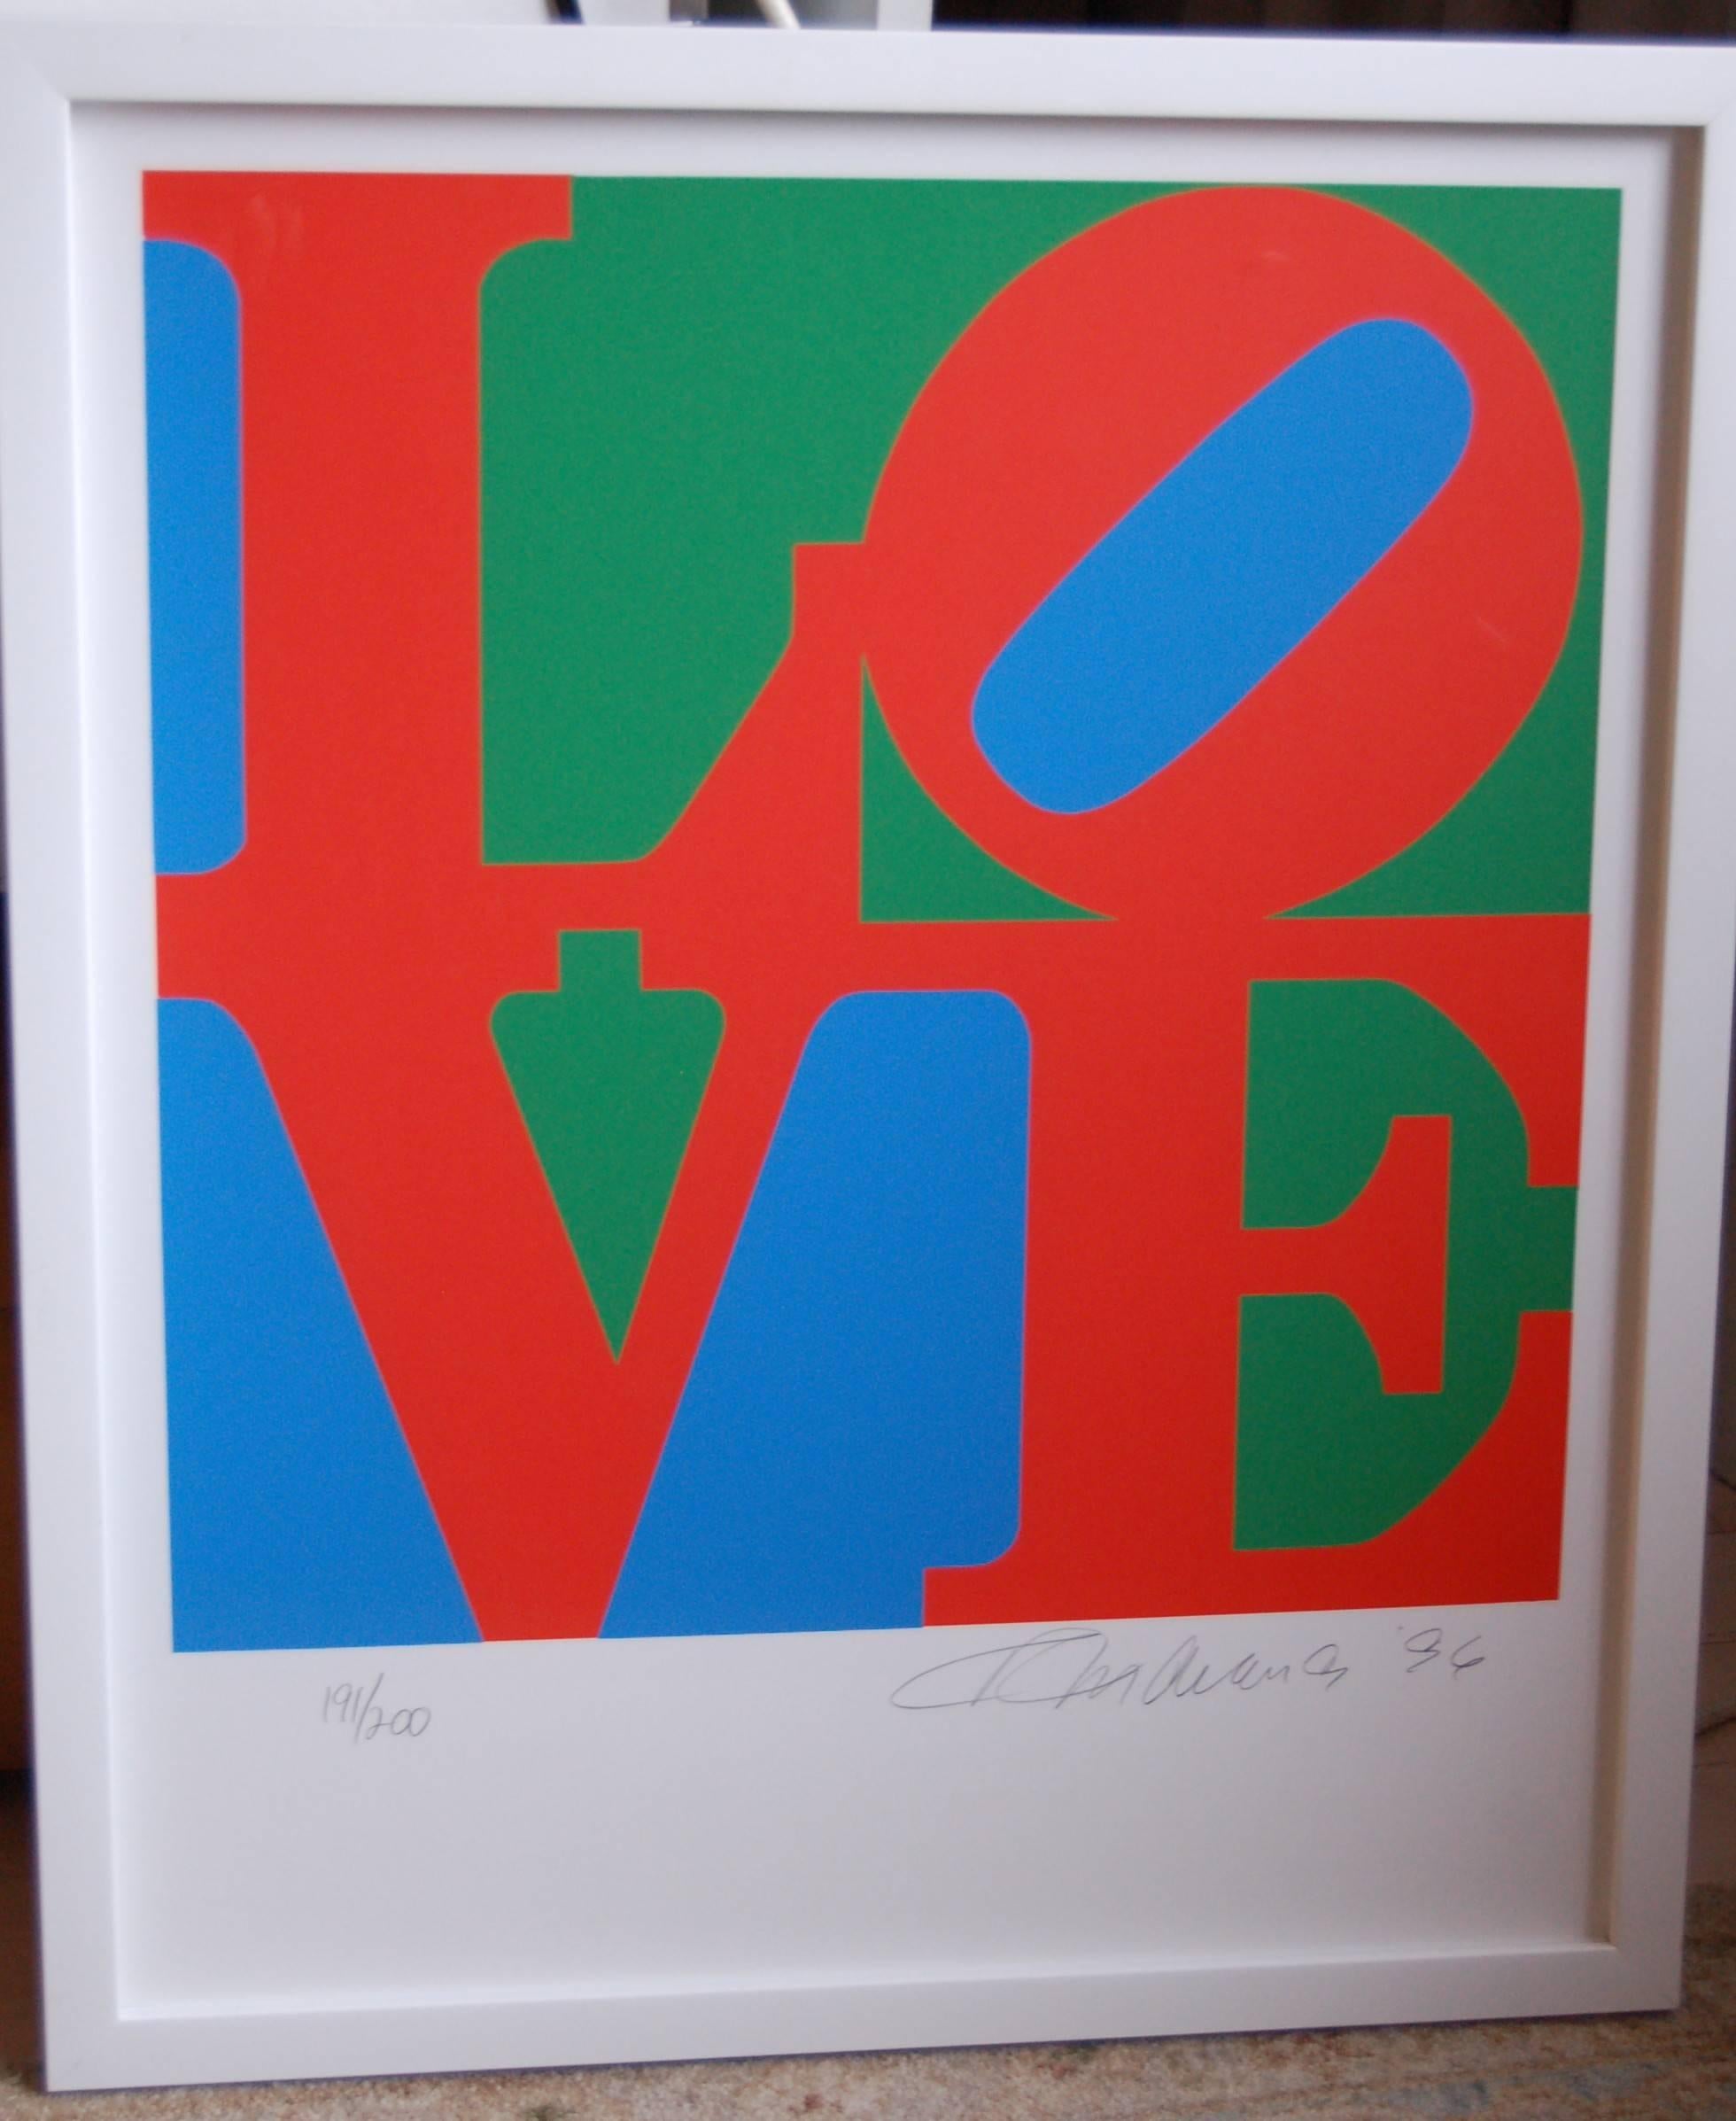 LOVE (Blue Red Green) - Pop Art Print by Robert Indiana